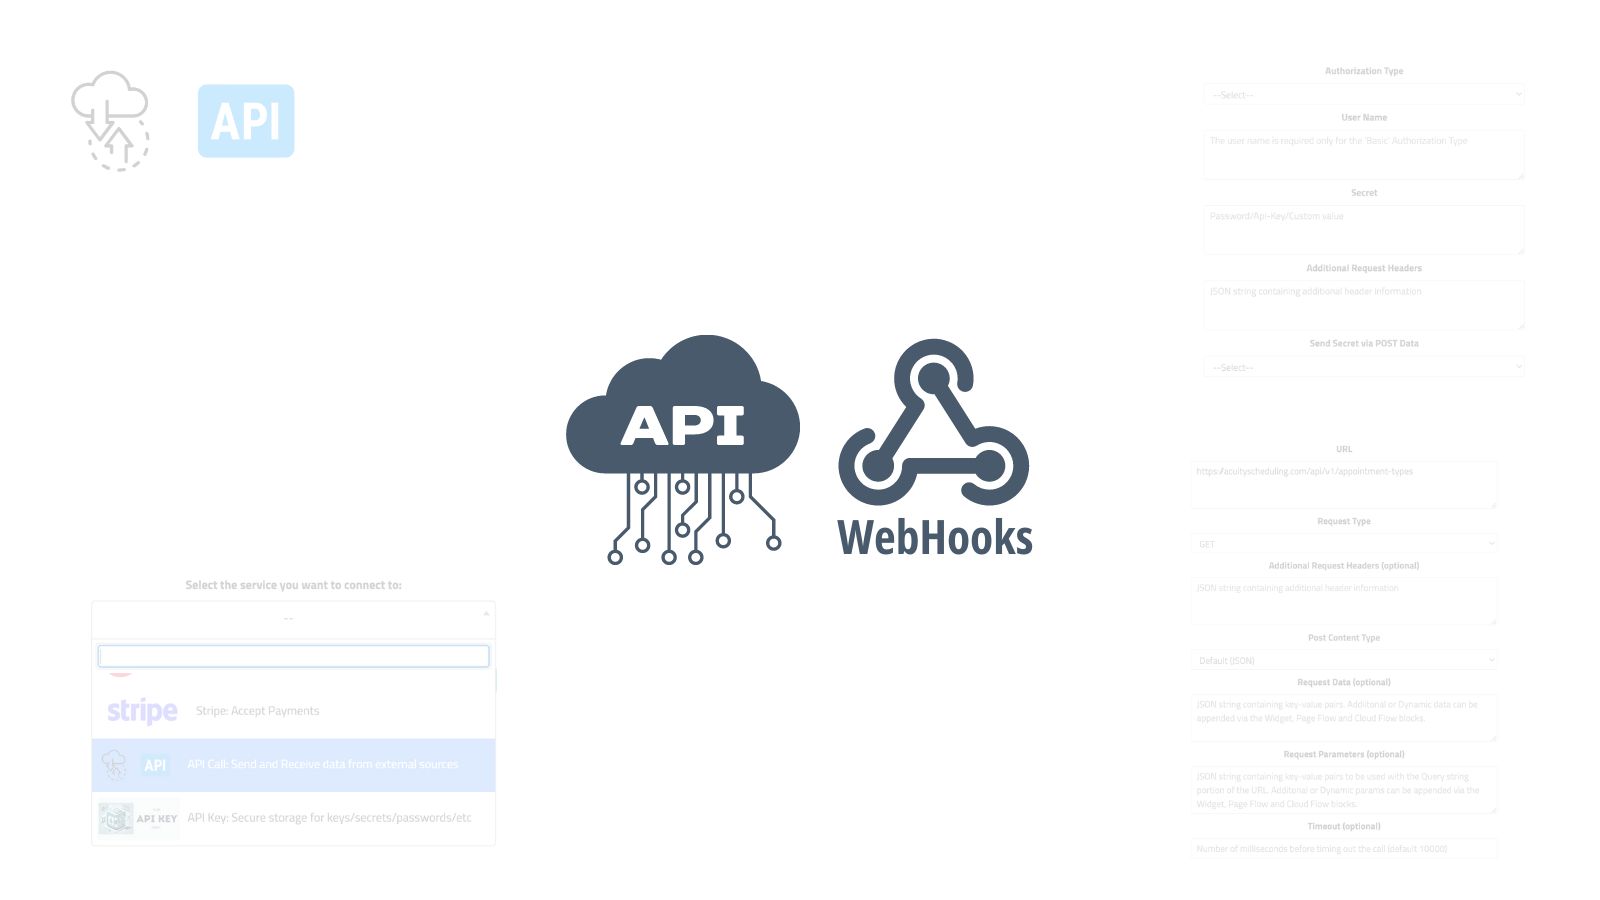 API calls and Web Hook functionality